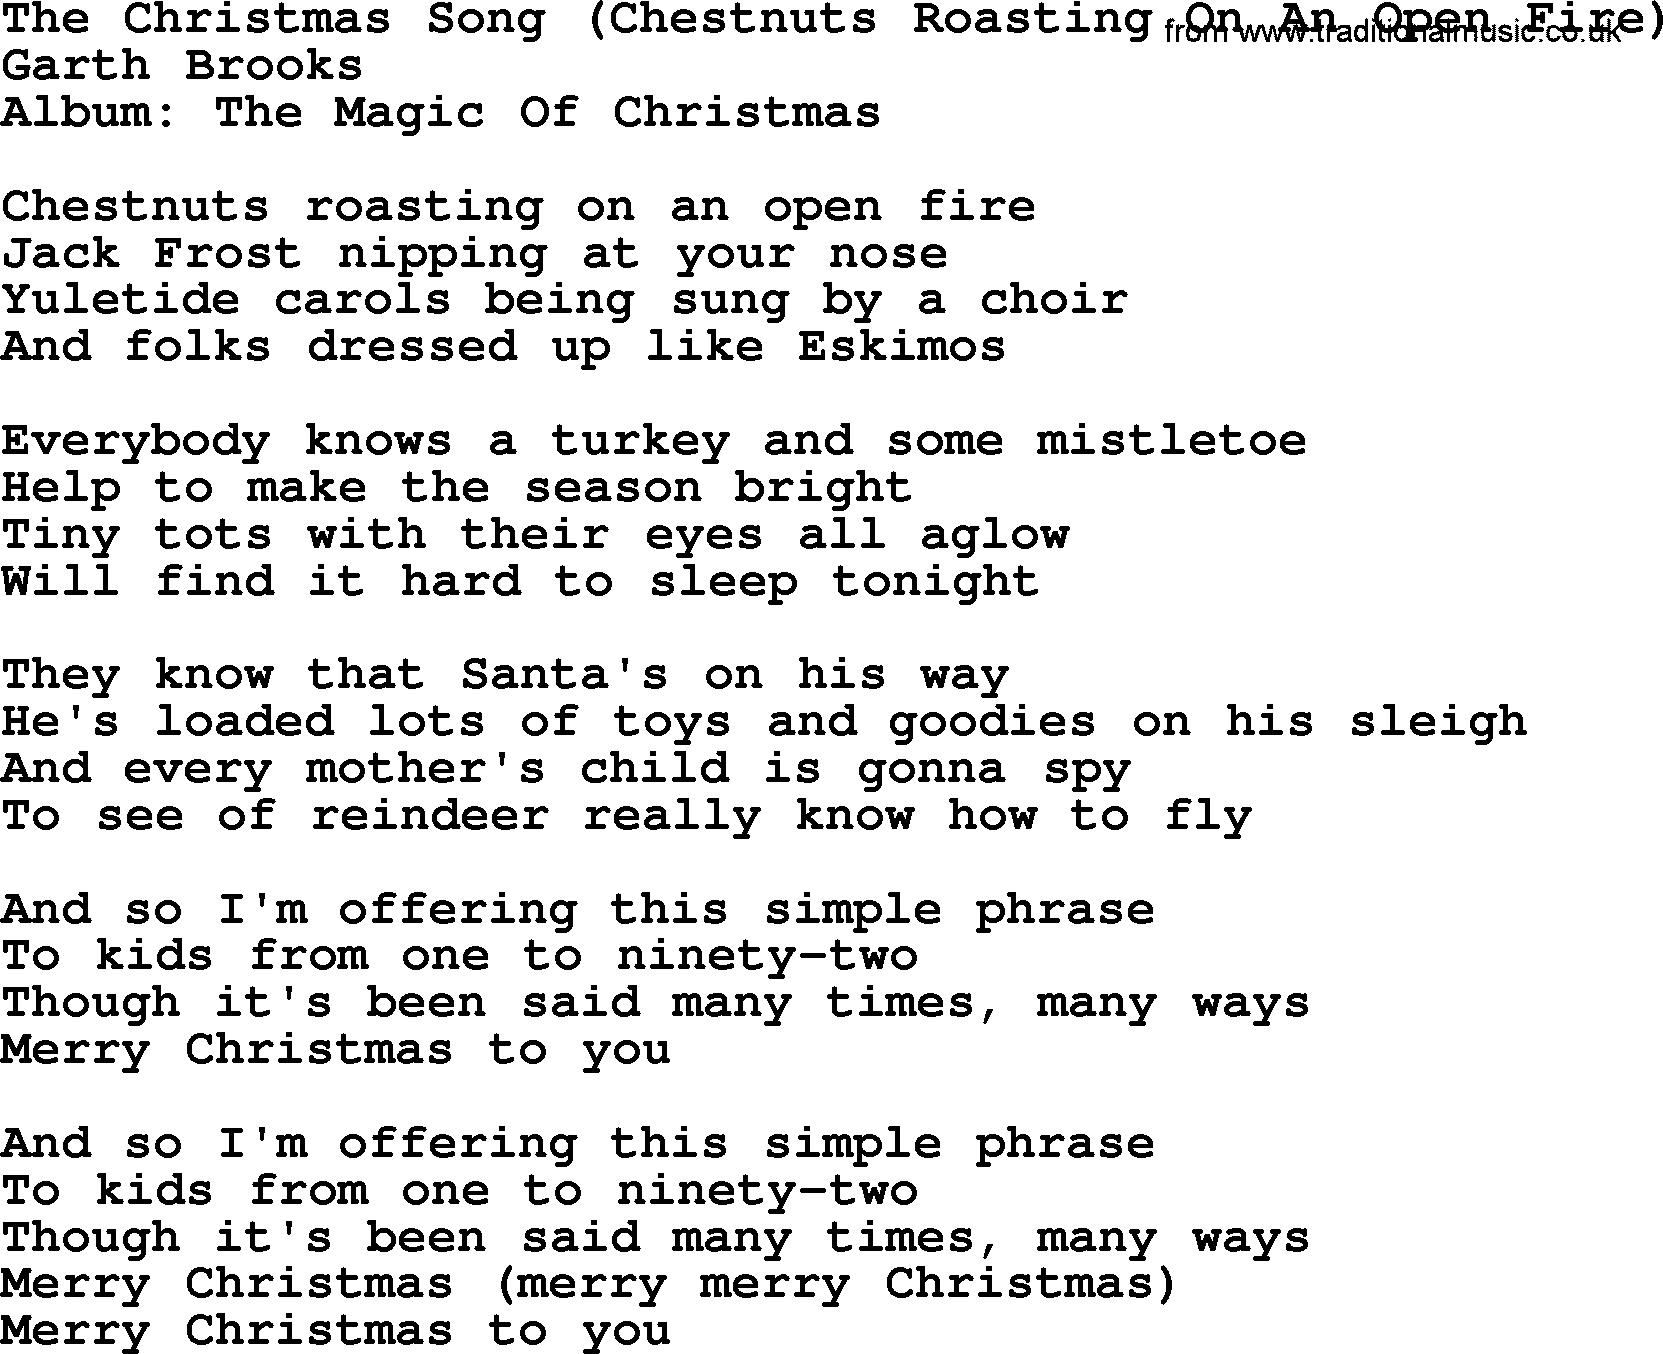 Garth Brooks song: The Christmas Song, lyrics